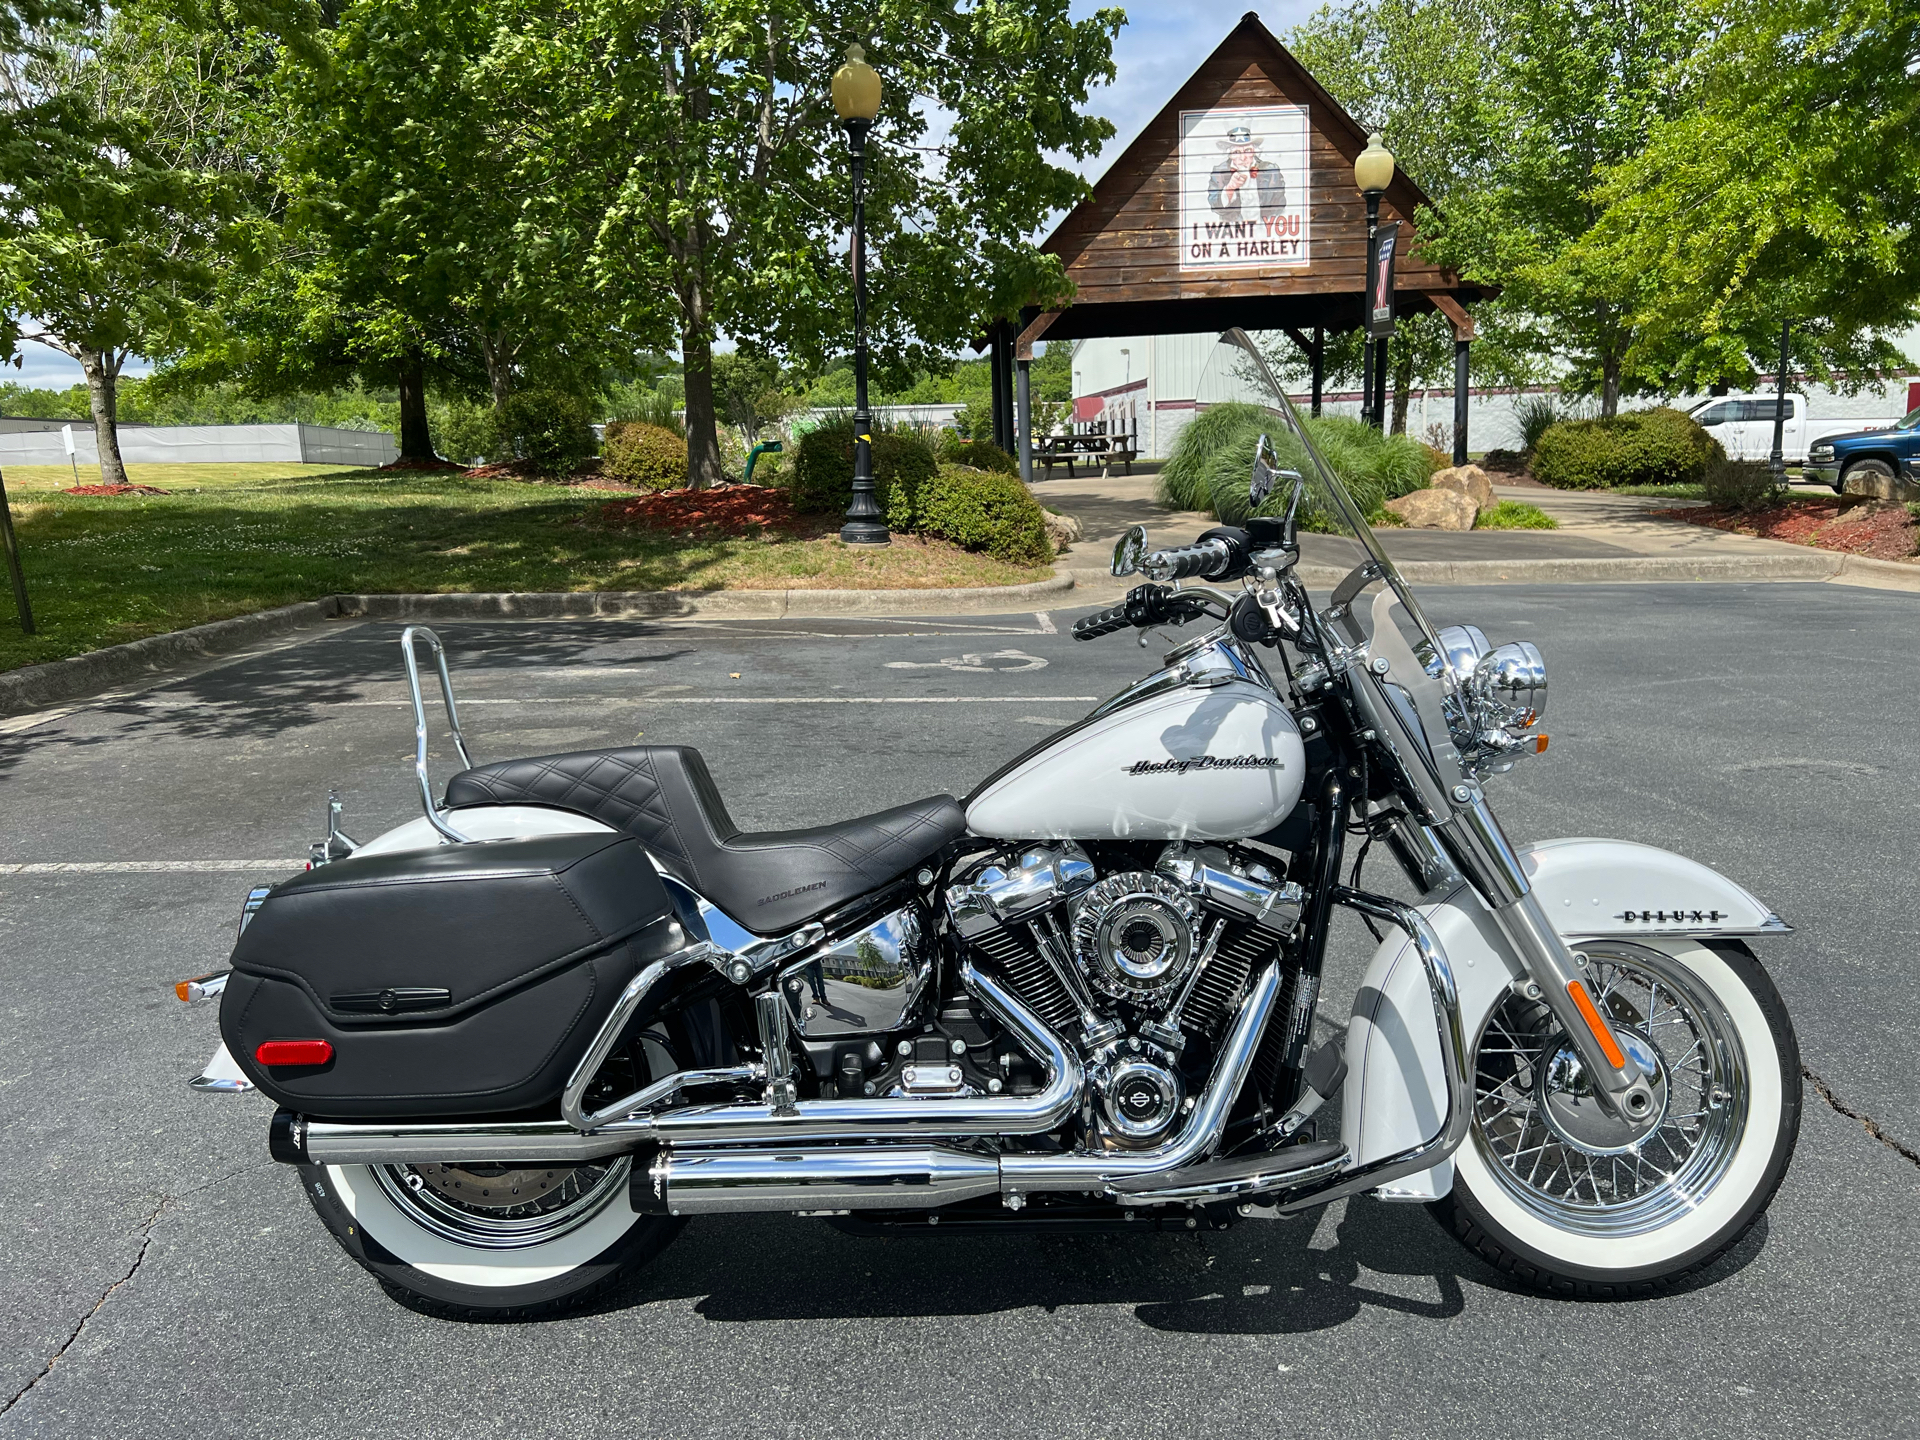 2020 Harley-Davidson Deluxe in Burlington, North Carolina - Photo 1